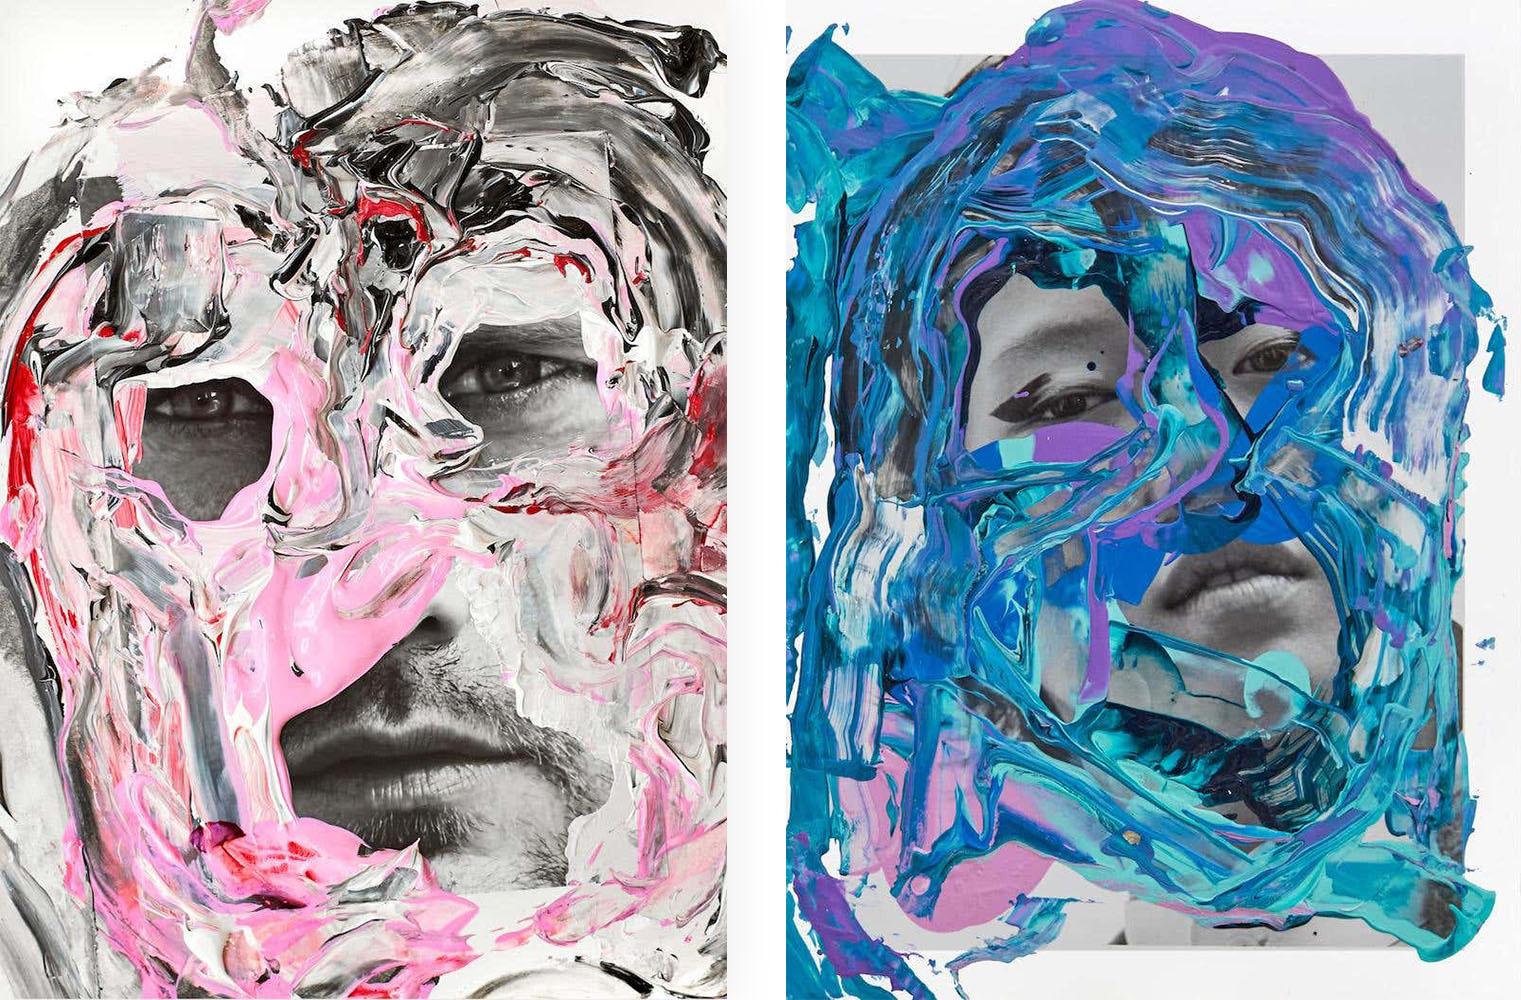 Skarsgård and Paris, Portraits Intervened by the artists. - Mixed Media Art by Hunter & Gatti